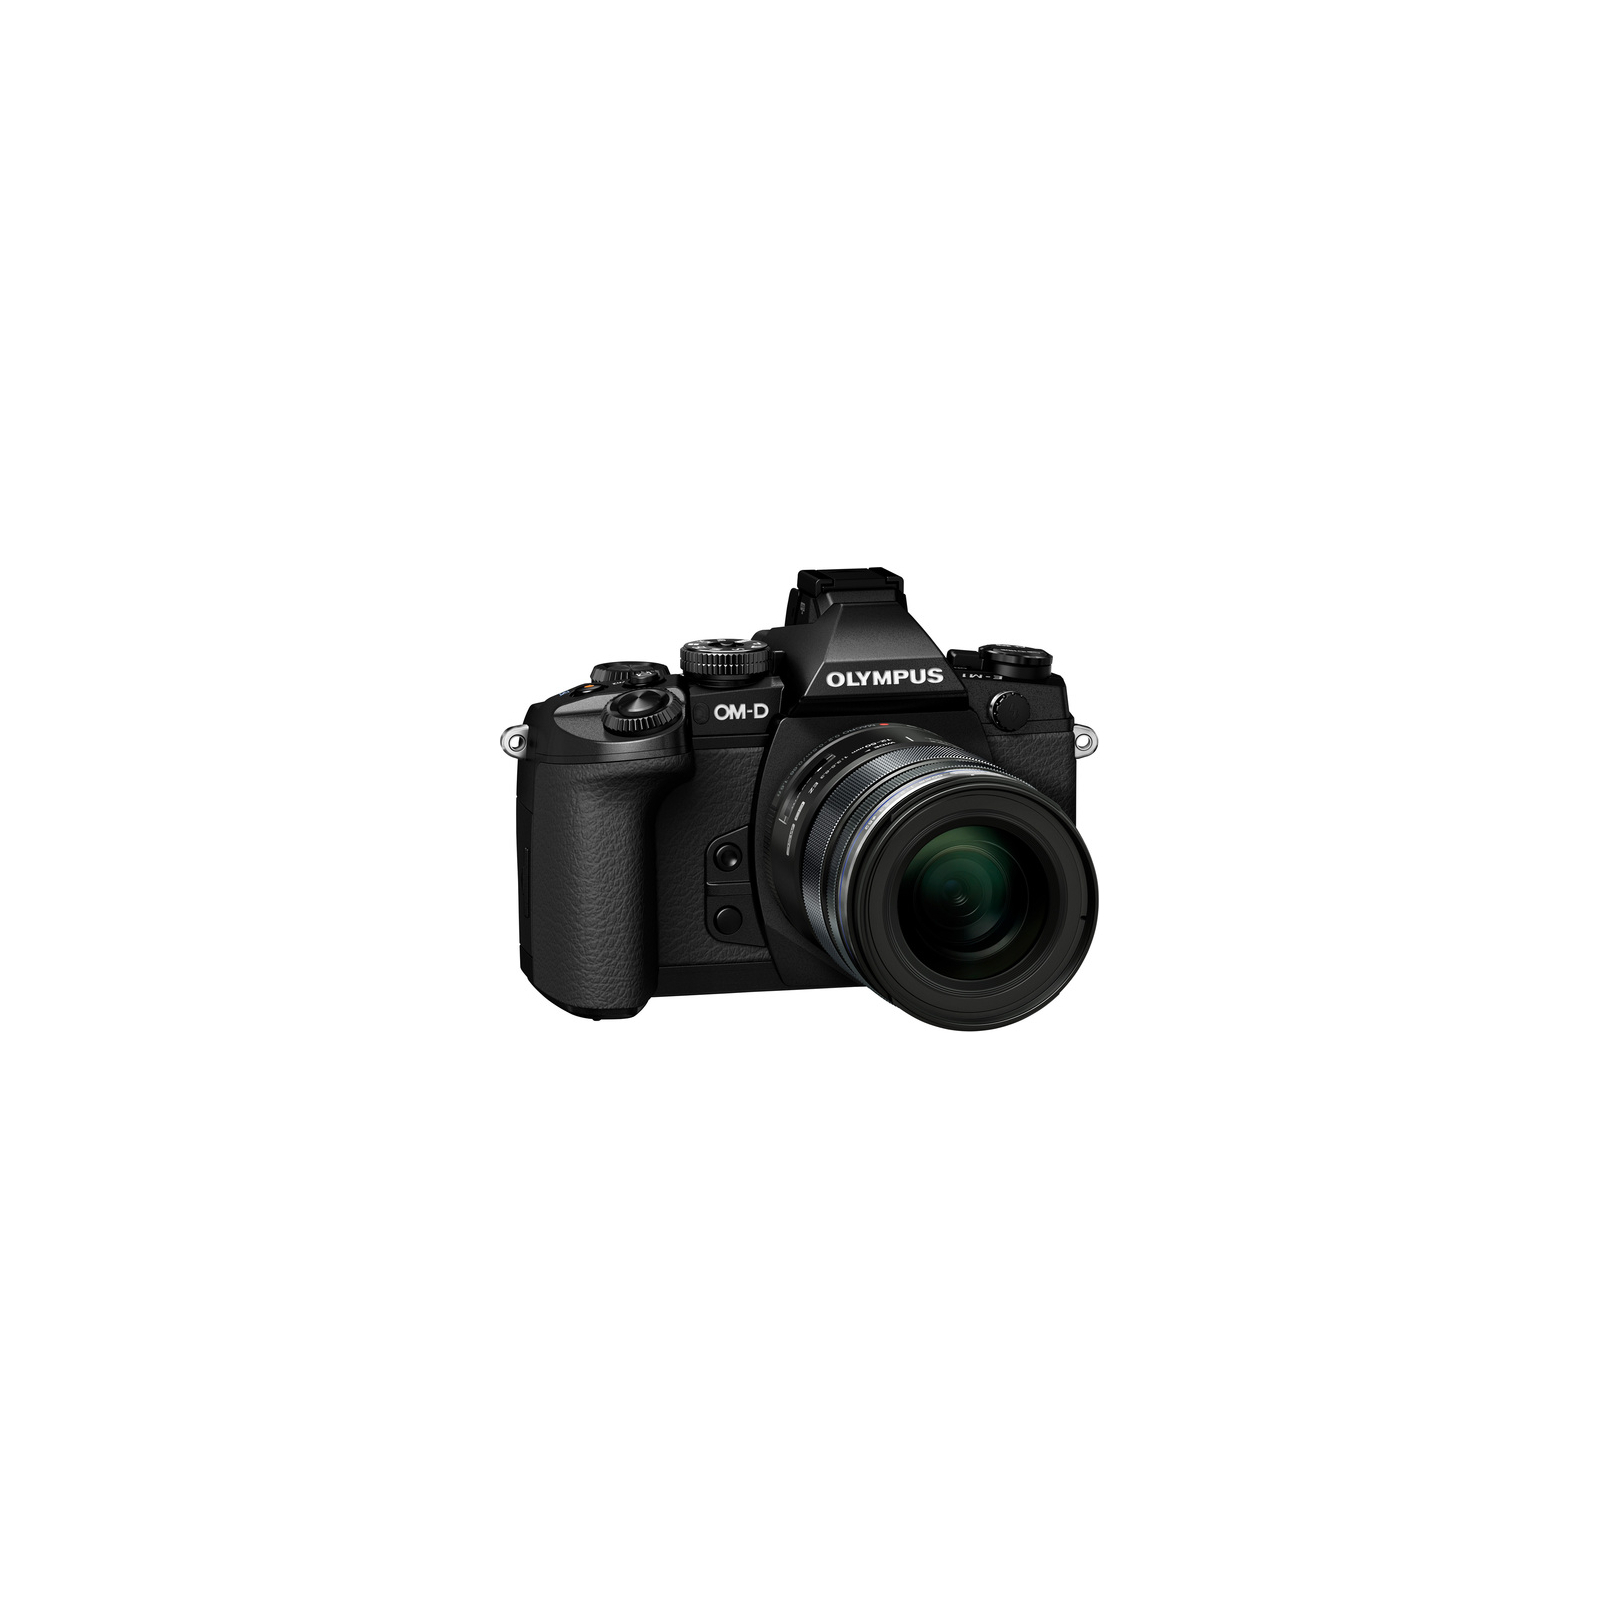 Цифровой фотоаппарат Olympus E-M1 12-40 Kit black/black (V207017BE000) изображение 3